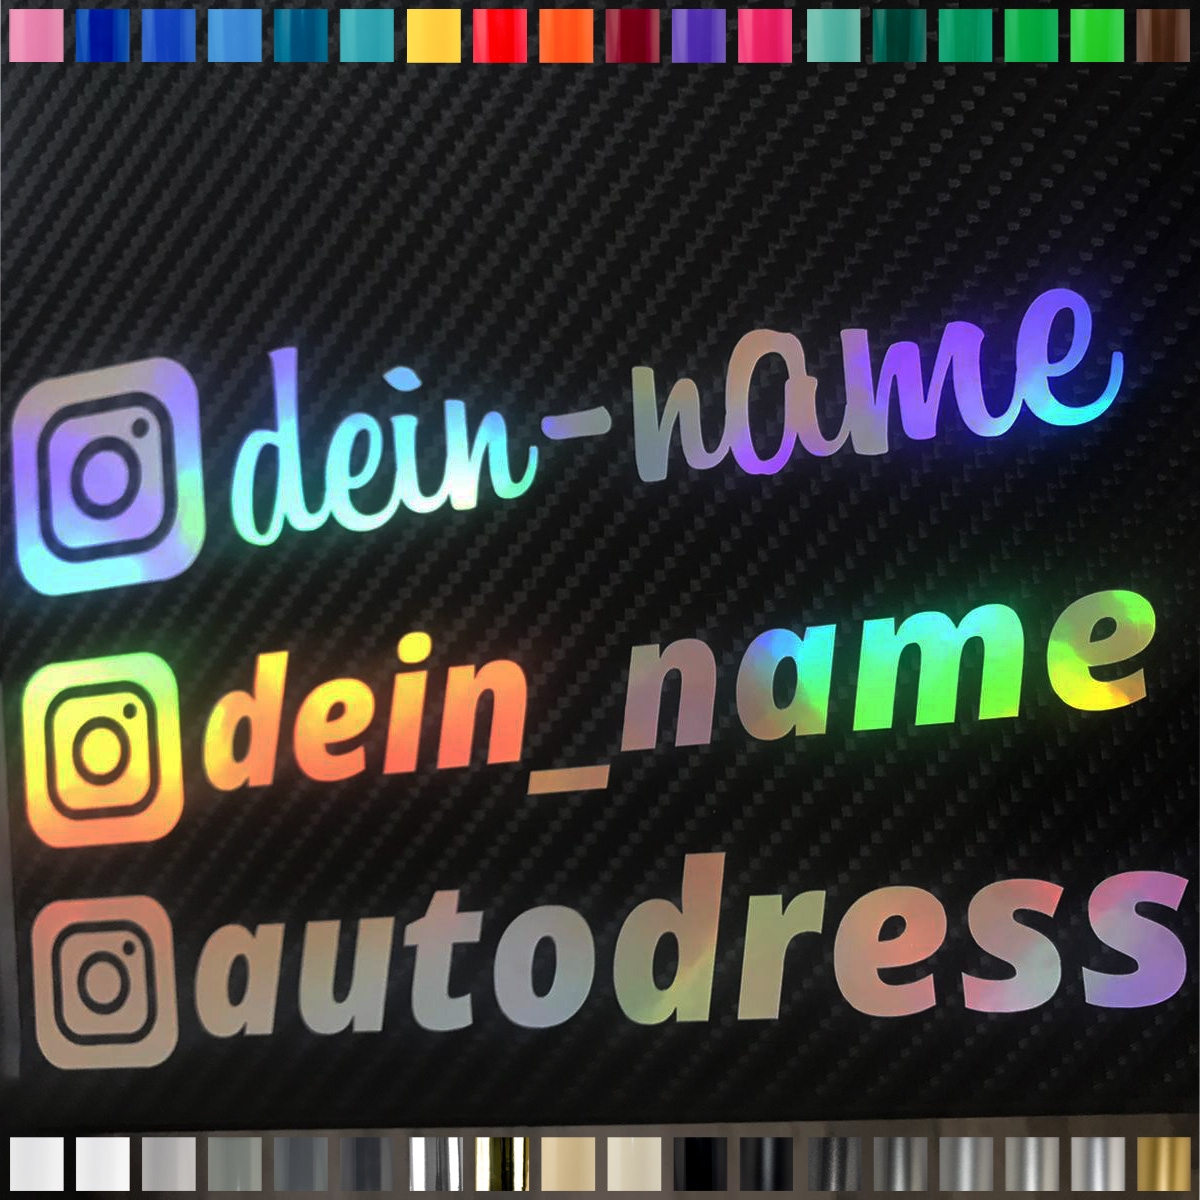 Instagram name sticker set/décor 1 pcs. 20x5cm in desired color